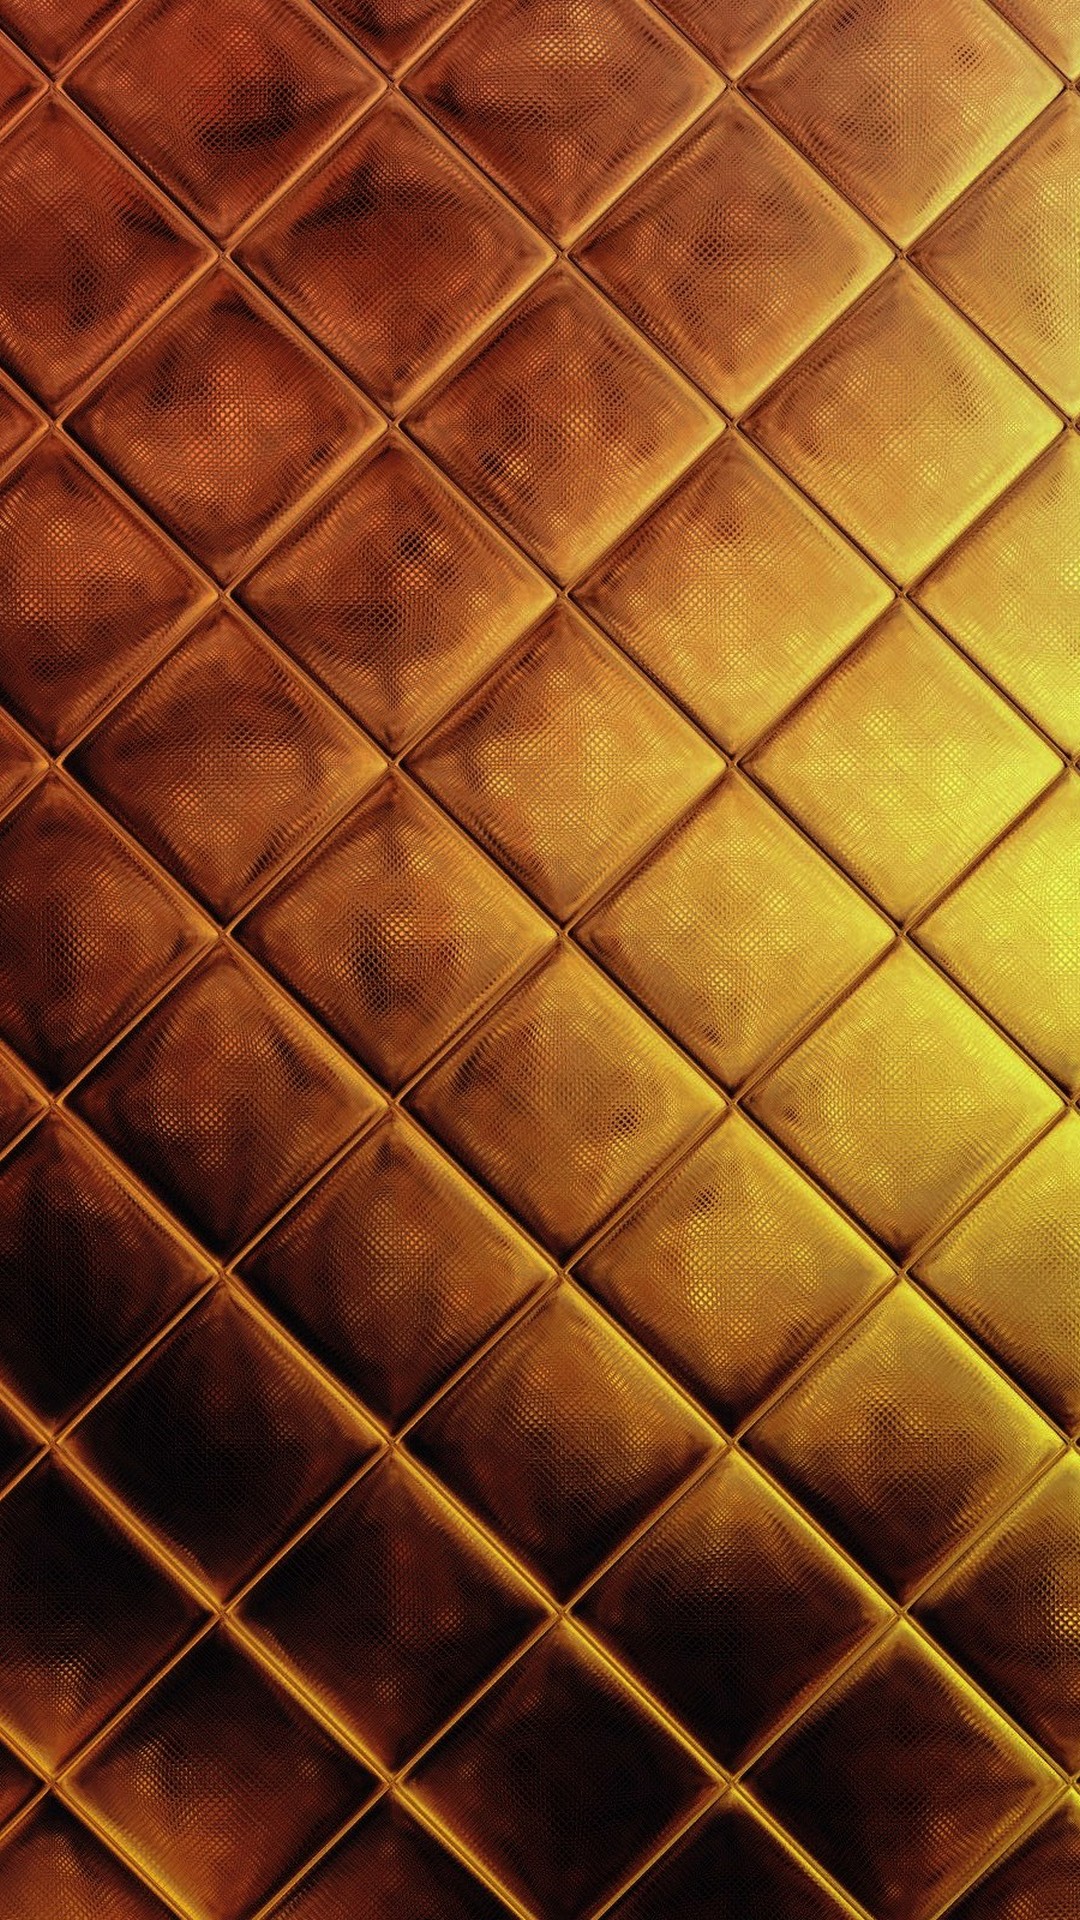 Gold Pattern iPhone Wallpaper resolution 1080x1920